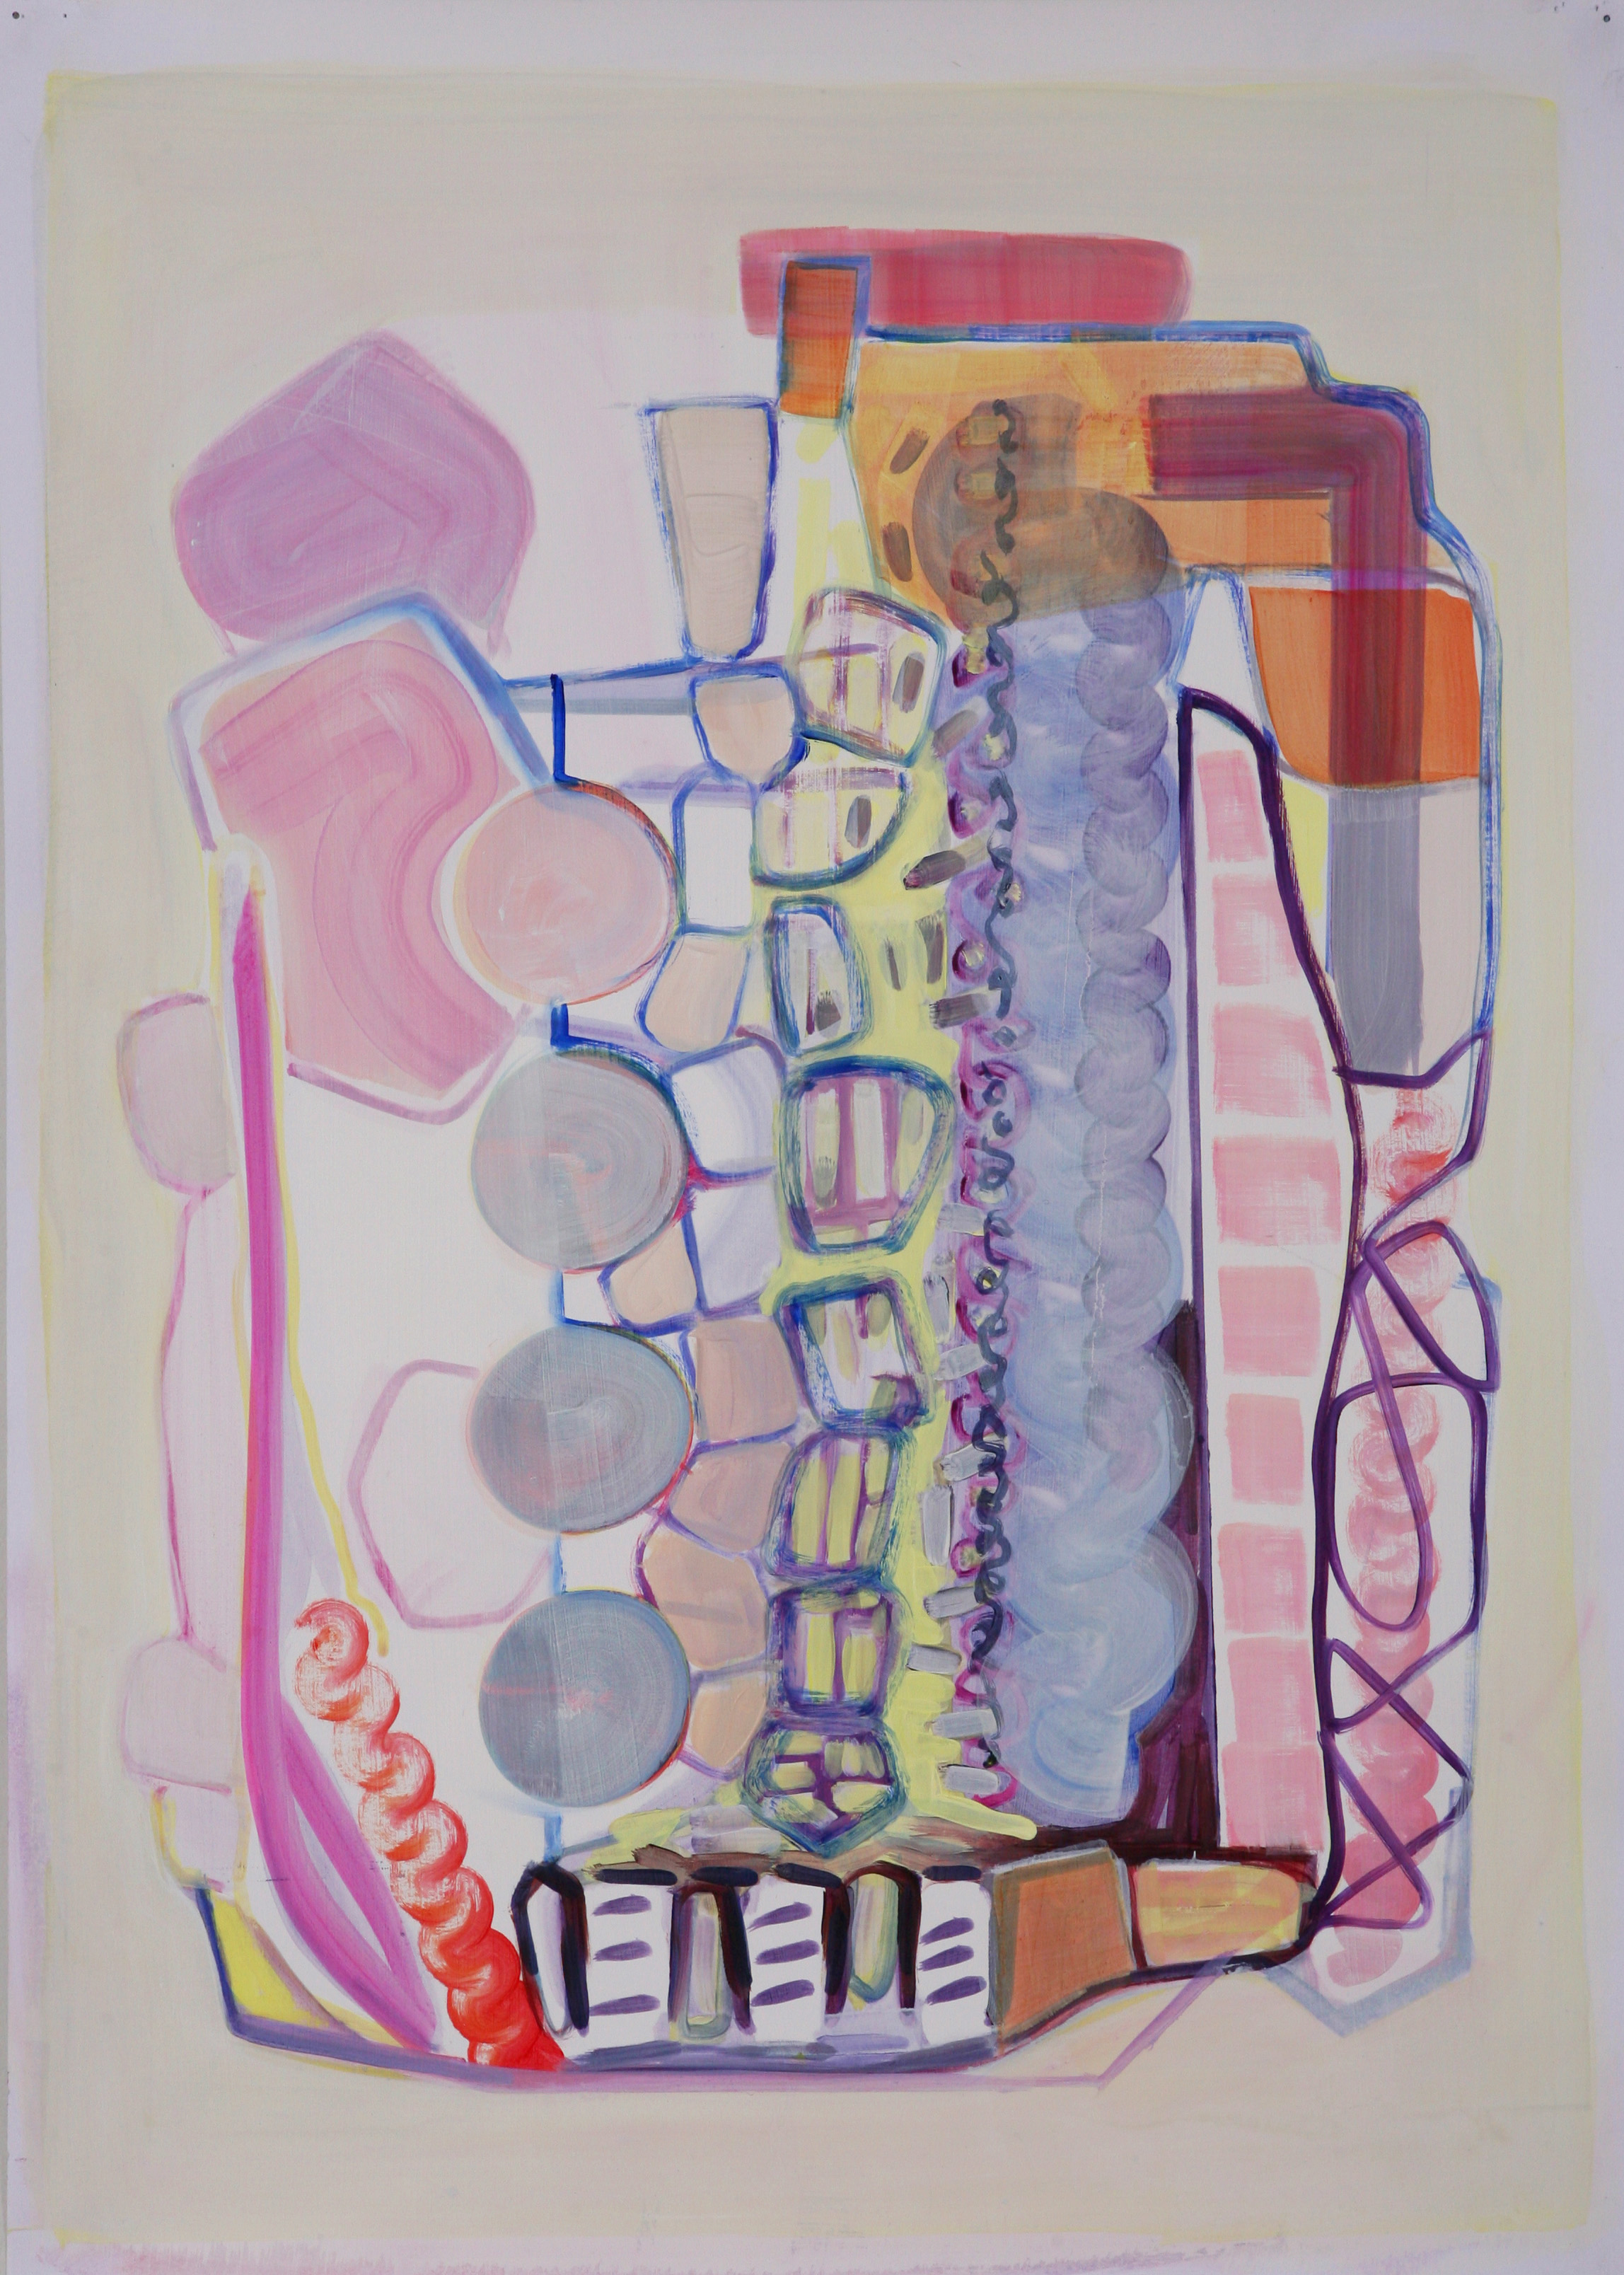  Untitled (blob), 2013, oil on paper, 59cm x 42cm 